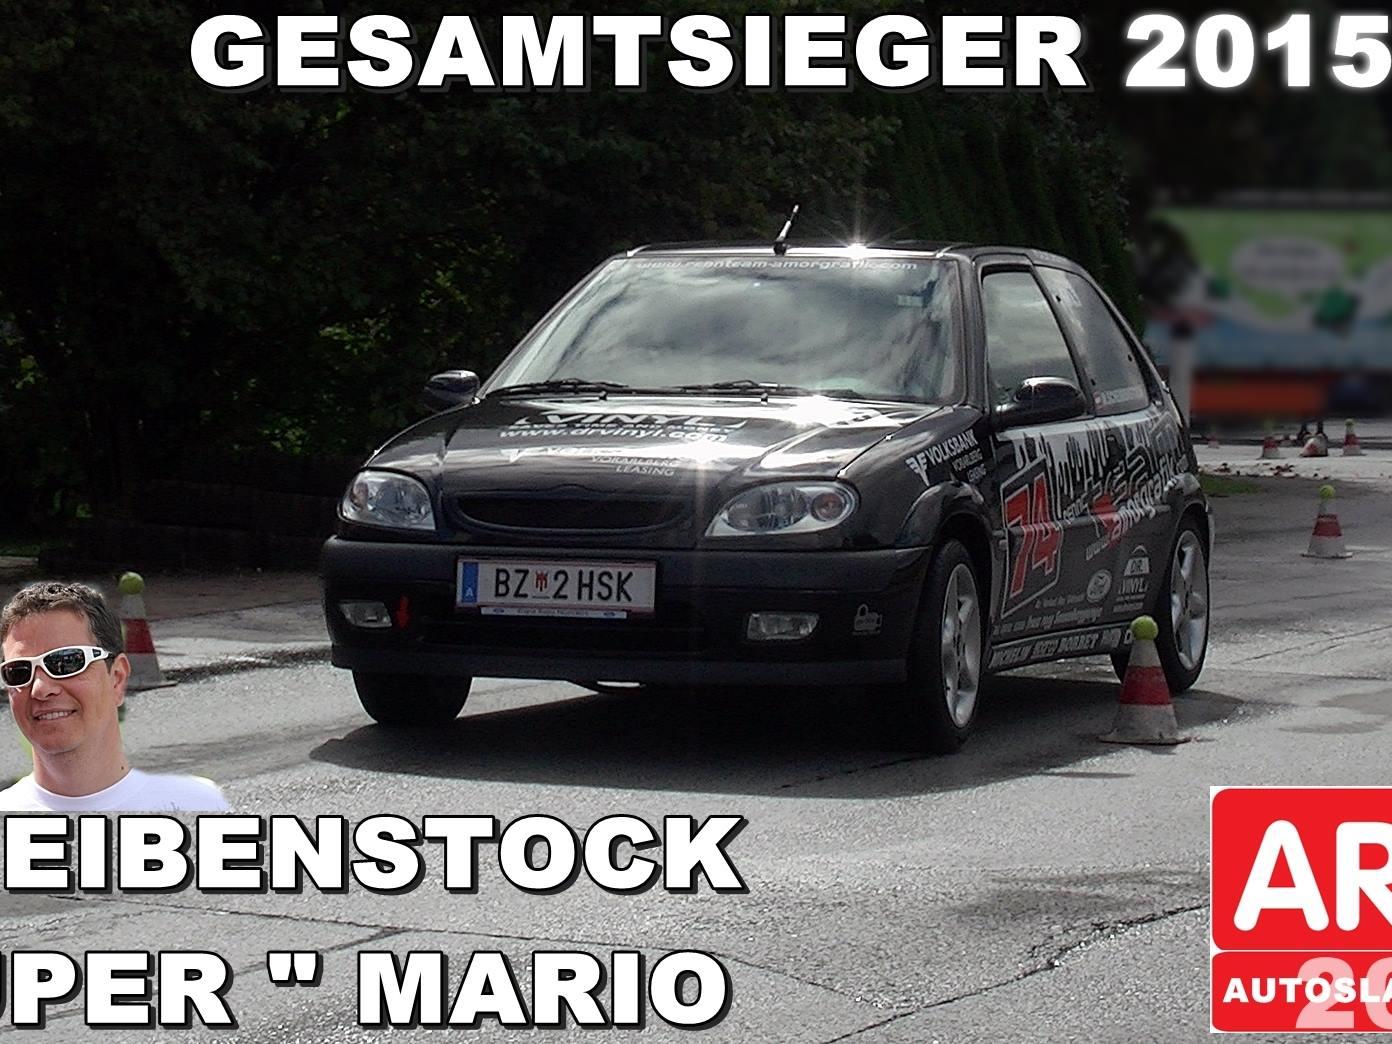 ATMAS Gesamtsieger 2015 "Scheibenstock Mario"